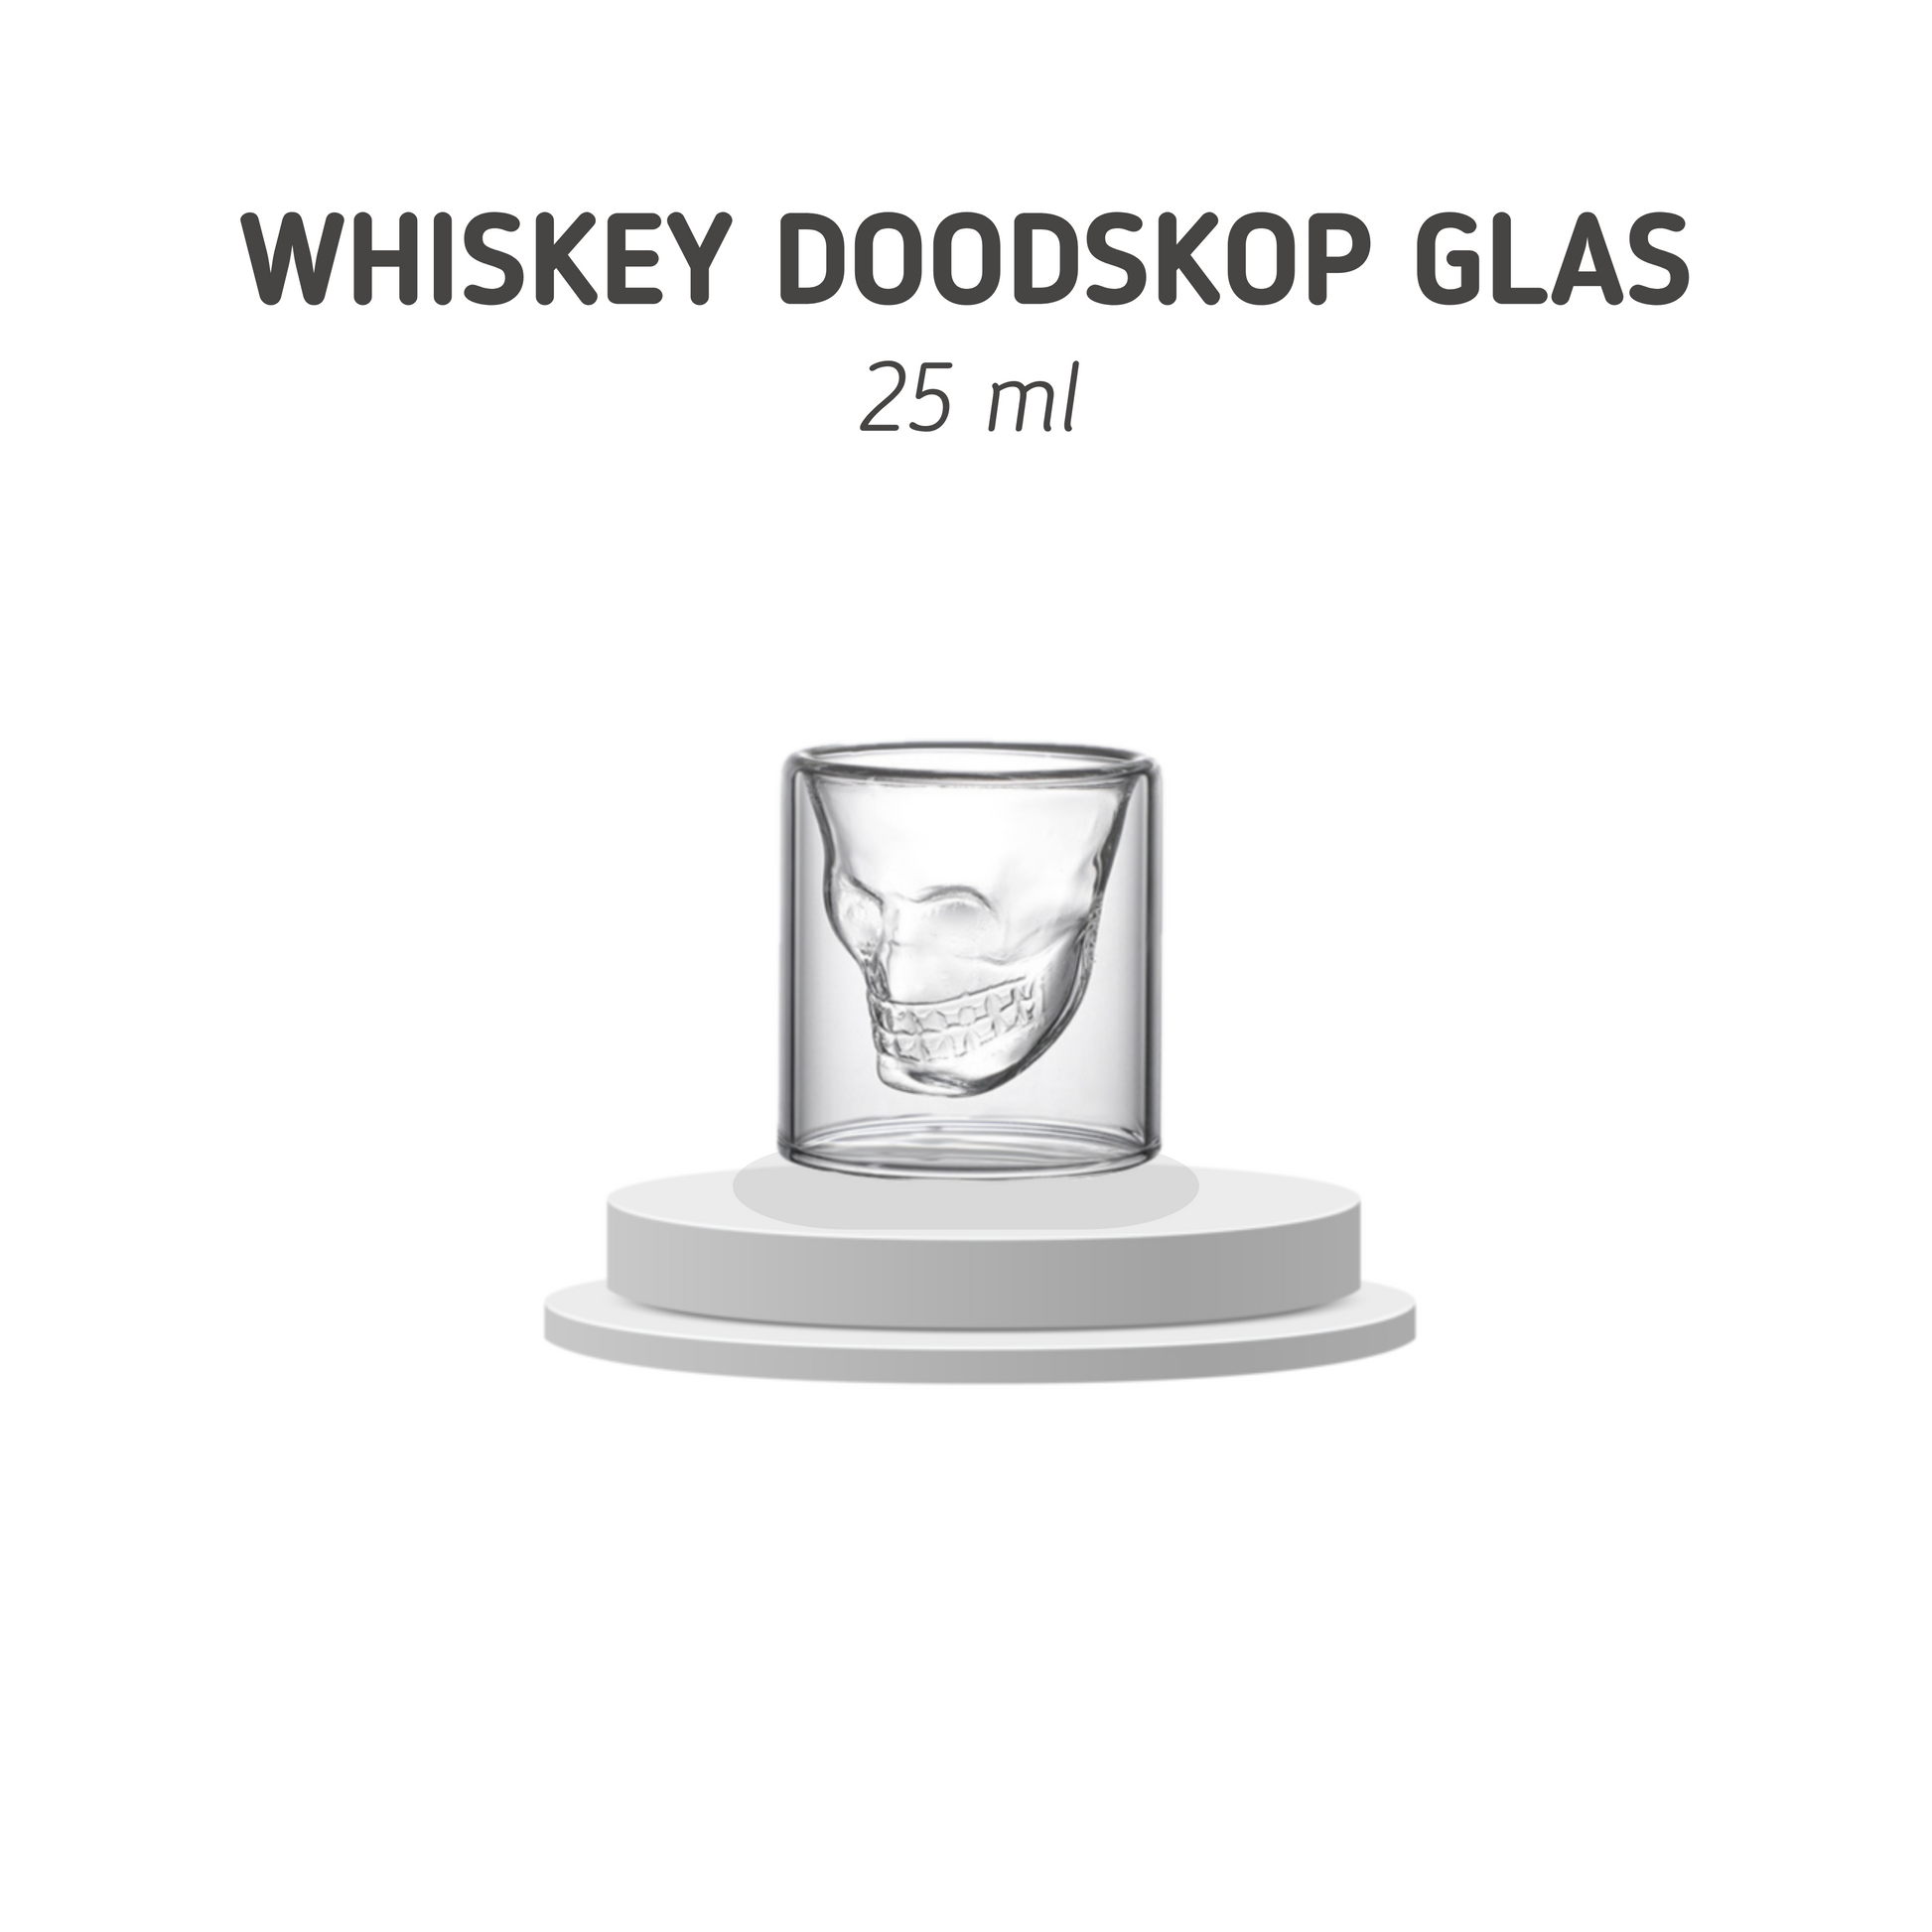 MOLOO-Whiskey-Glas-Skull-Shot-Borrelglaasjes-Shotglas-Schedel-Glas-Doodskop-25mlMOLOO-Whiskey-Glas-Skull-Shot-Borrelglaasjes-Shotglas-Schedel-Glas-Doodskop-25ml